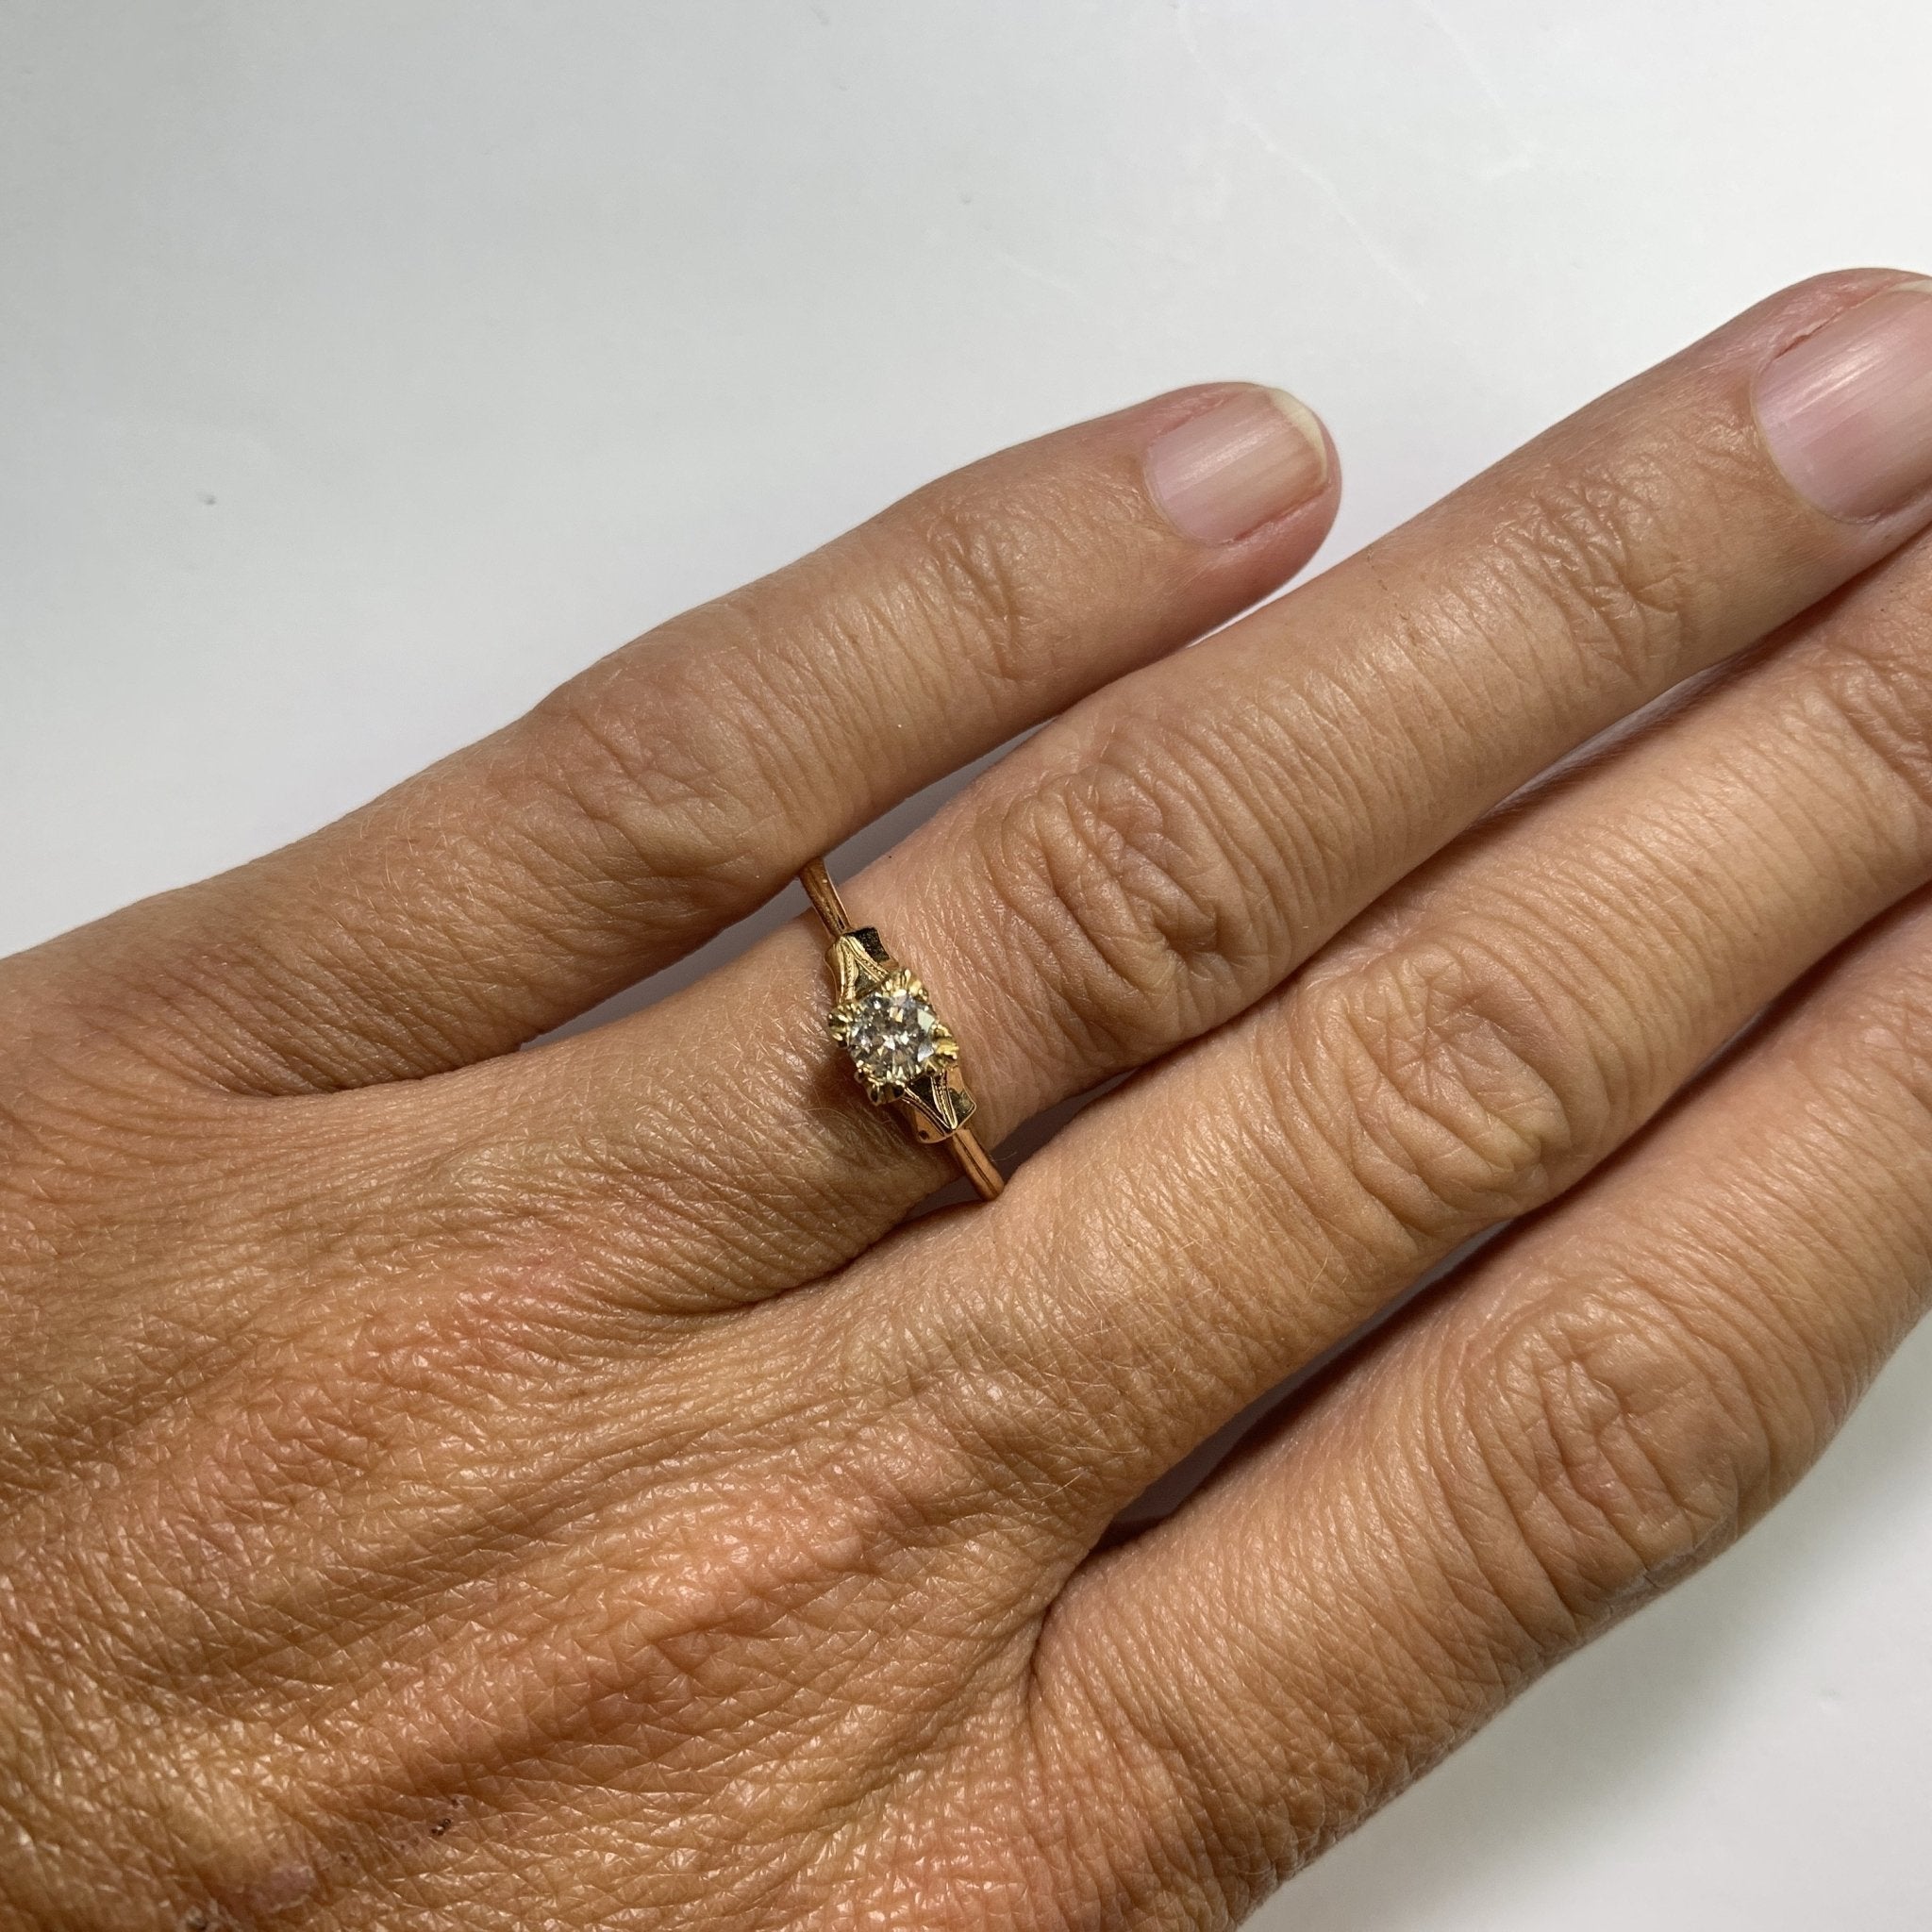 1940s diamond engagement ring set in 14k yellow gold april birthstone 10 year anniversary